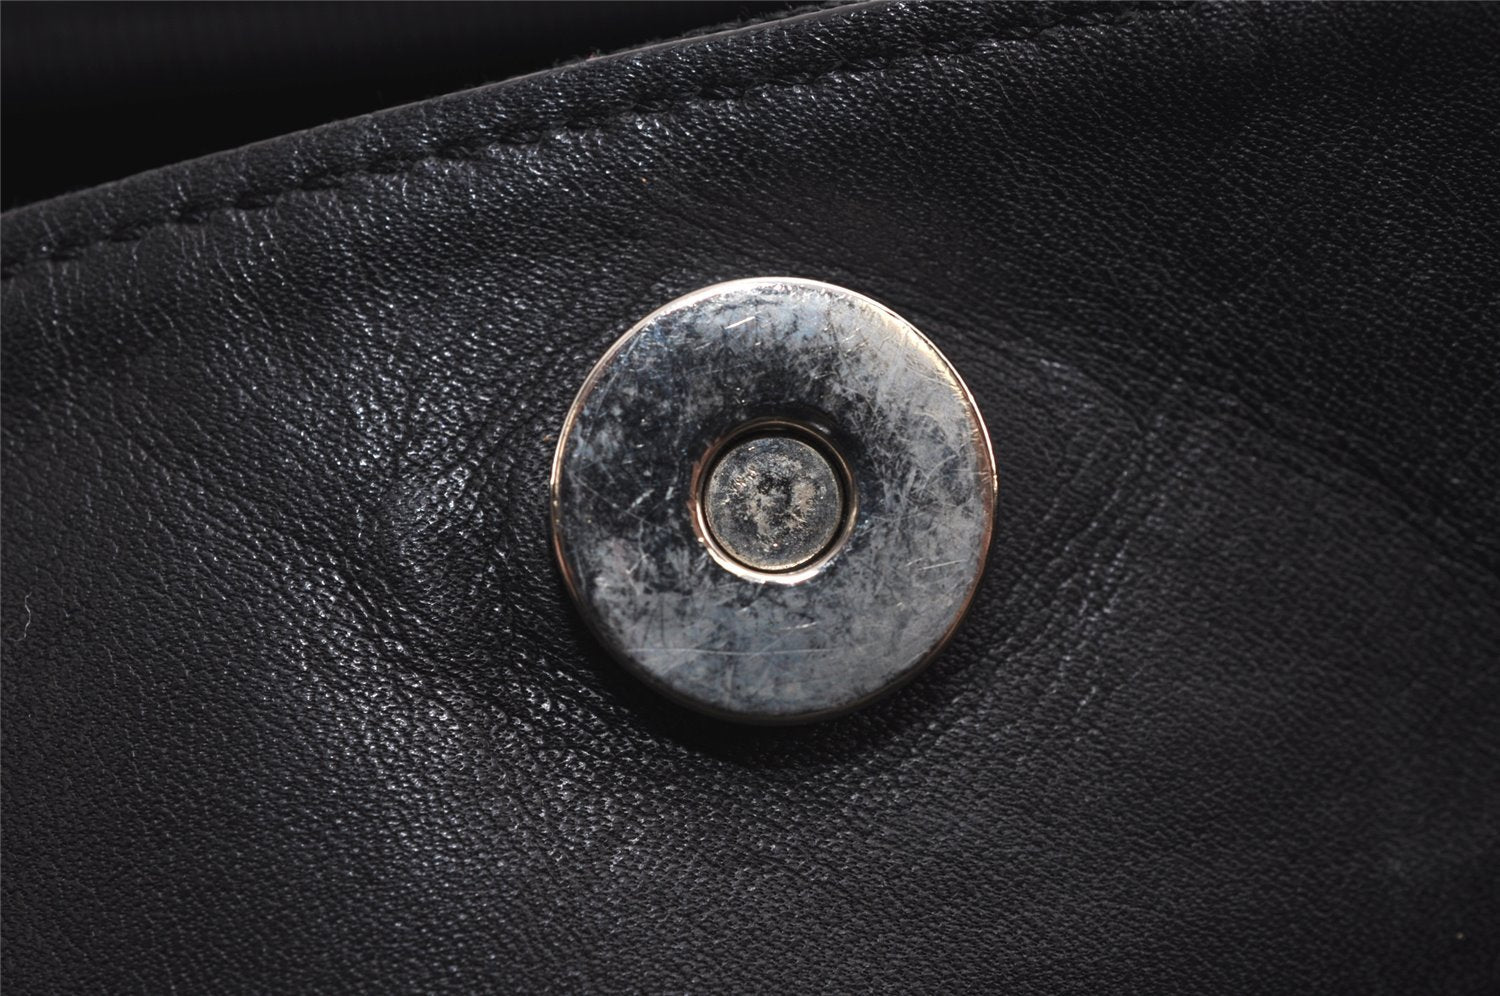 Authentic Salvatore Ferragamo Vara Canvas Leather Shoulder Tote Bag Black 7752J